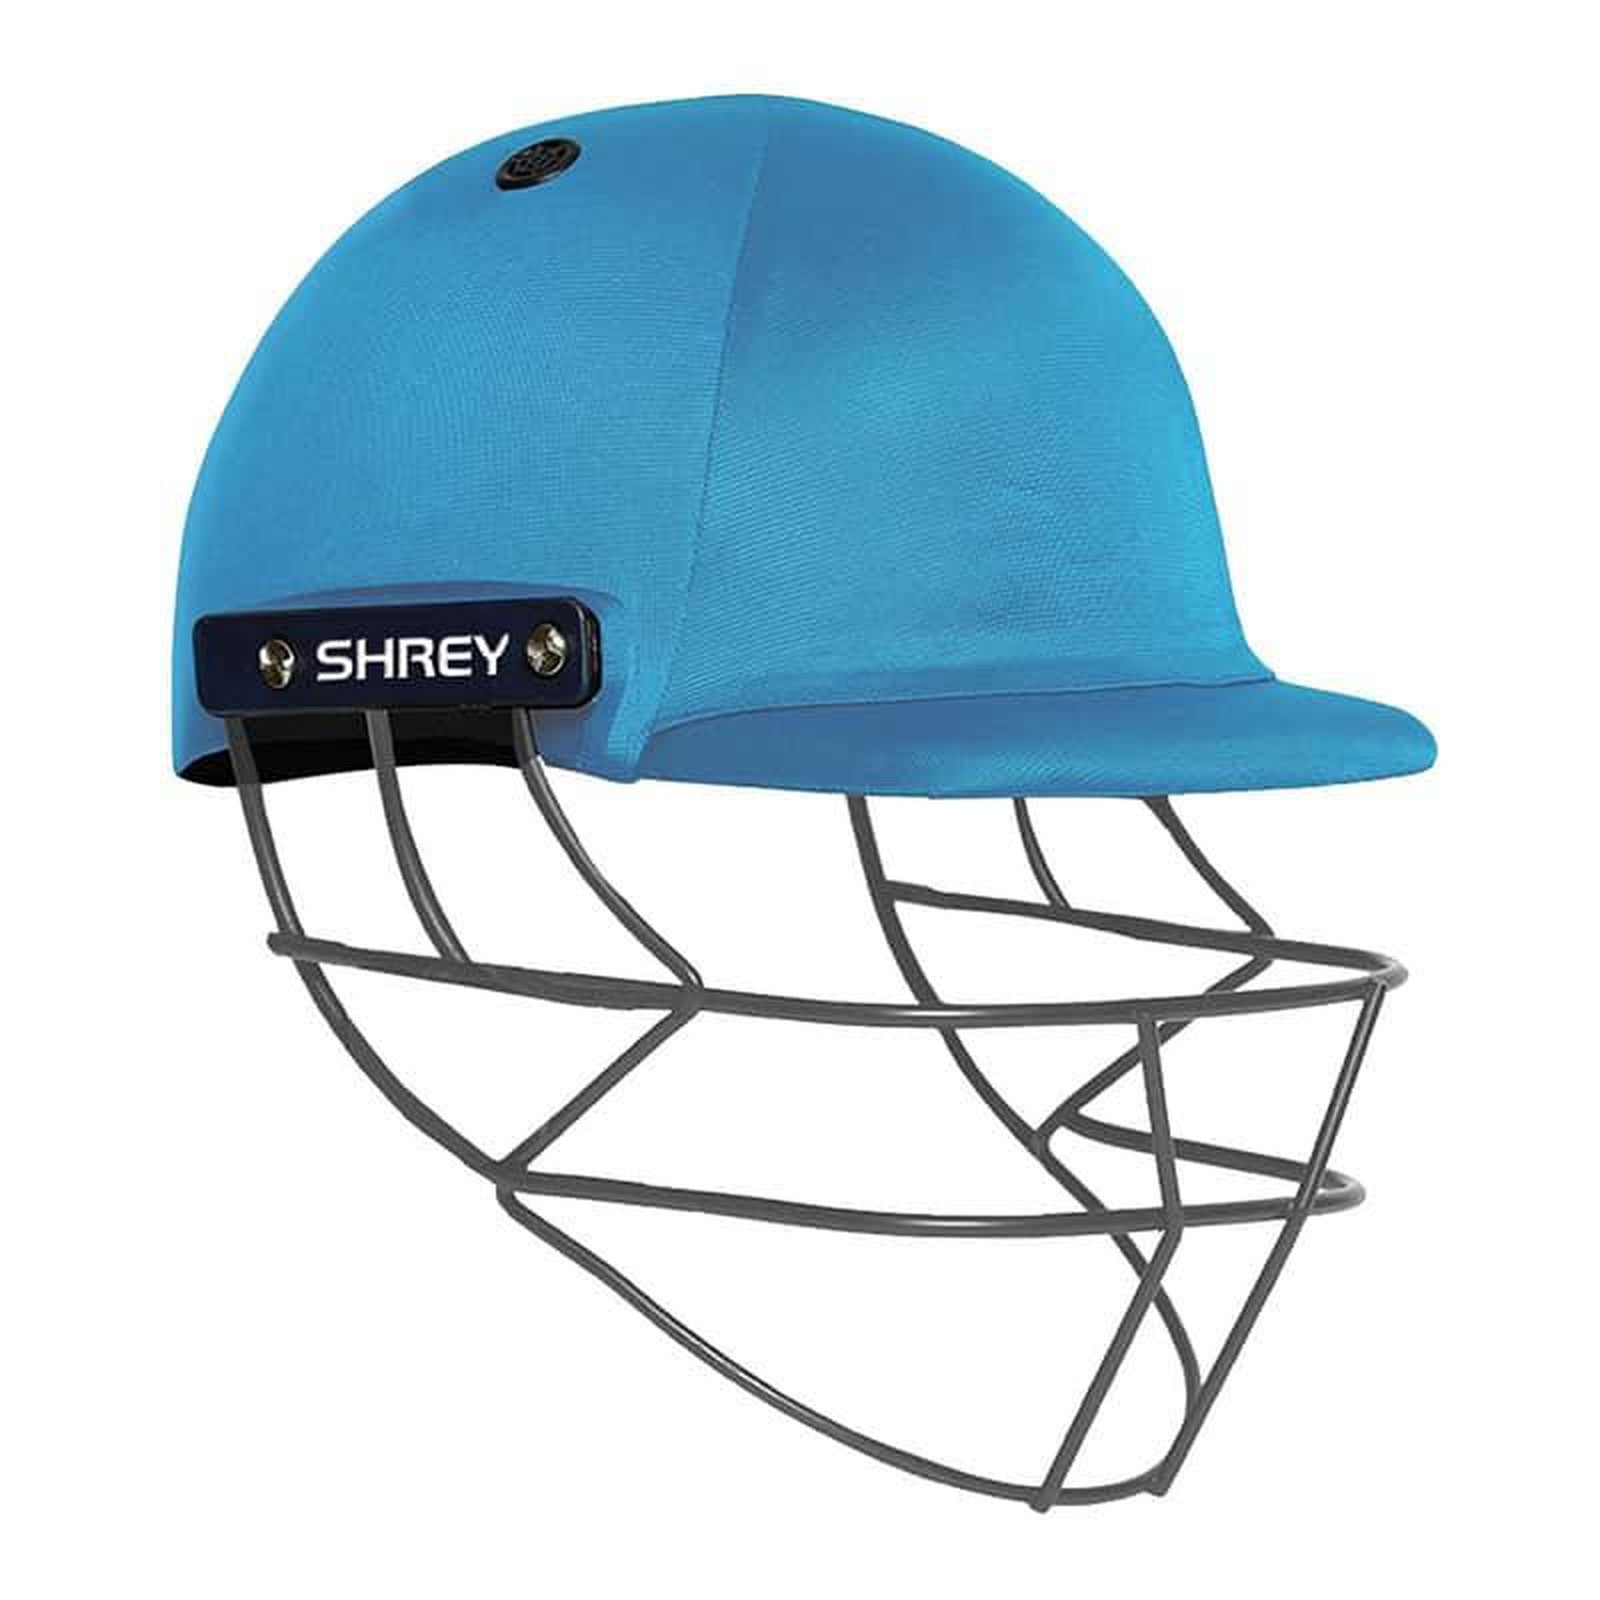 Shrey Performance 2.0 Cricket Helmet With Mild Steel - Sky Blue Senior